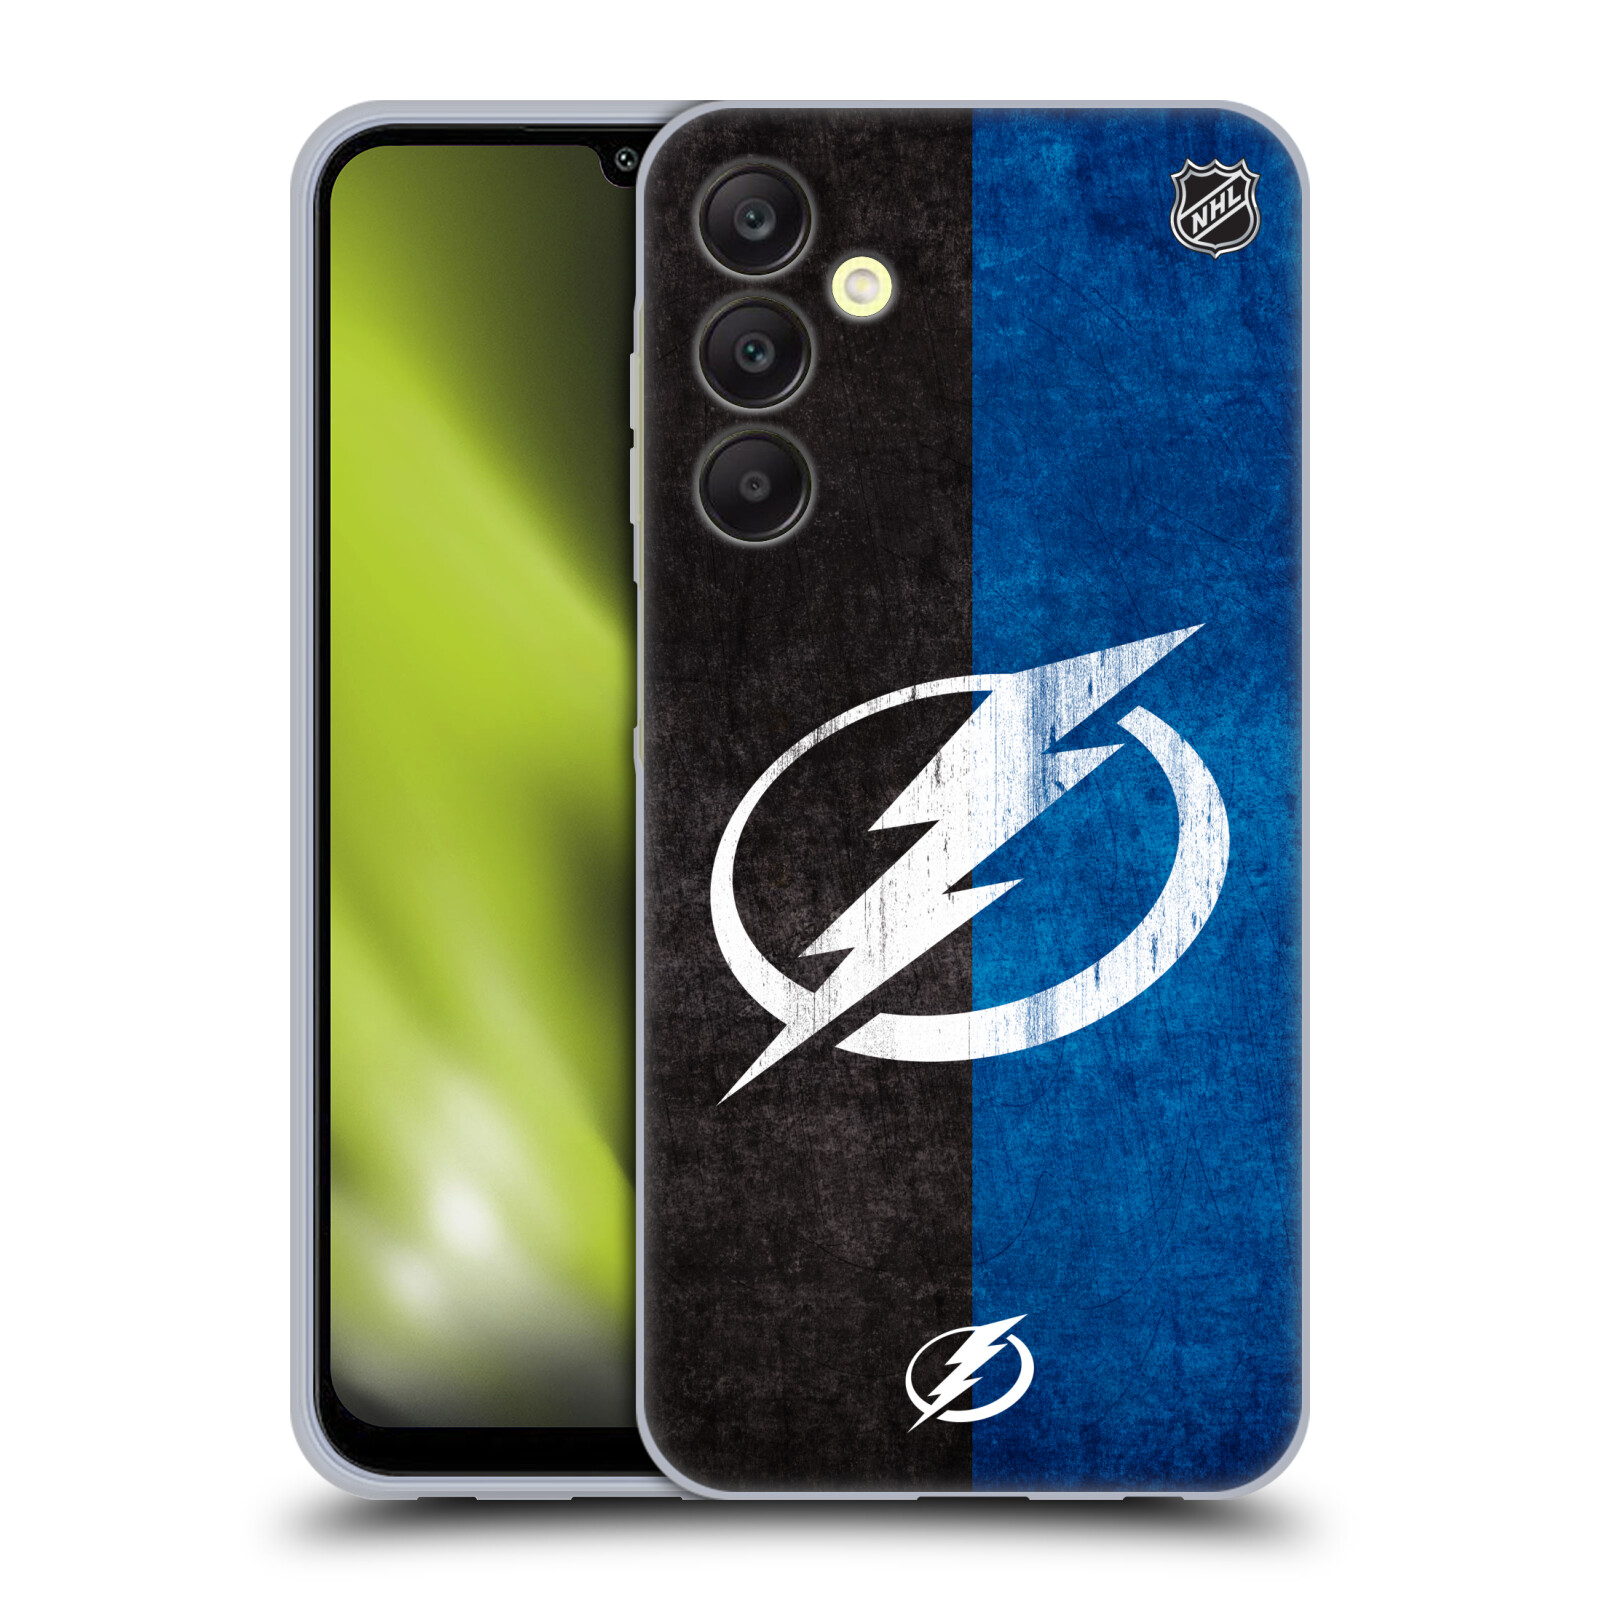 Silikonové pouzdro na mobil Samsung Galaxy A25 5G - NHL - Půlené logo Tampa Bay Lightning (Silikonový kryt, obal, pouzdro na mobilní telefon Samsung Galaxy A25 5G s licencovaným motivem NHL - Půlené logo Tampa Bay Lightning)